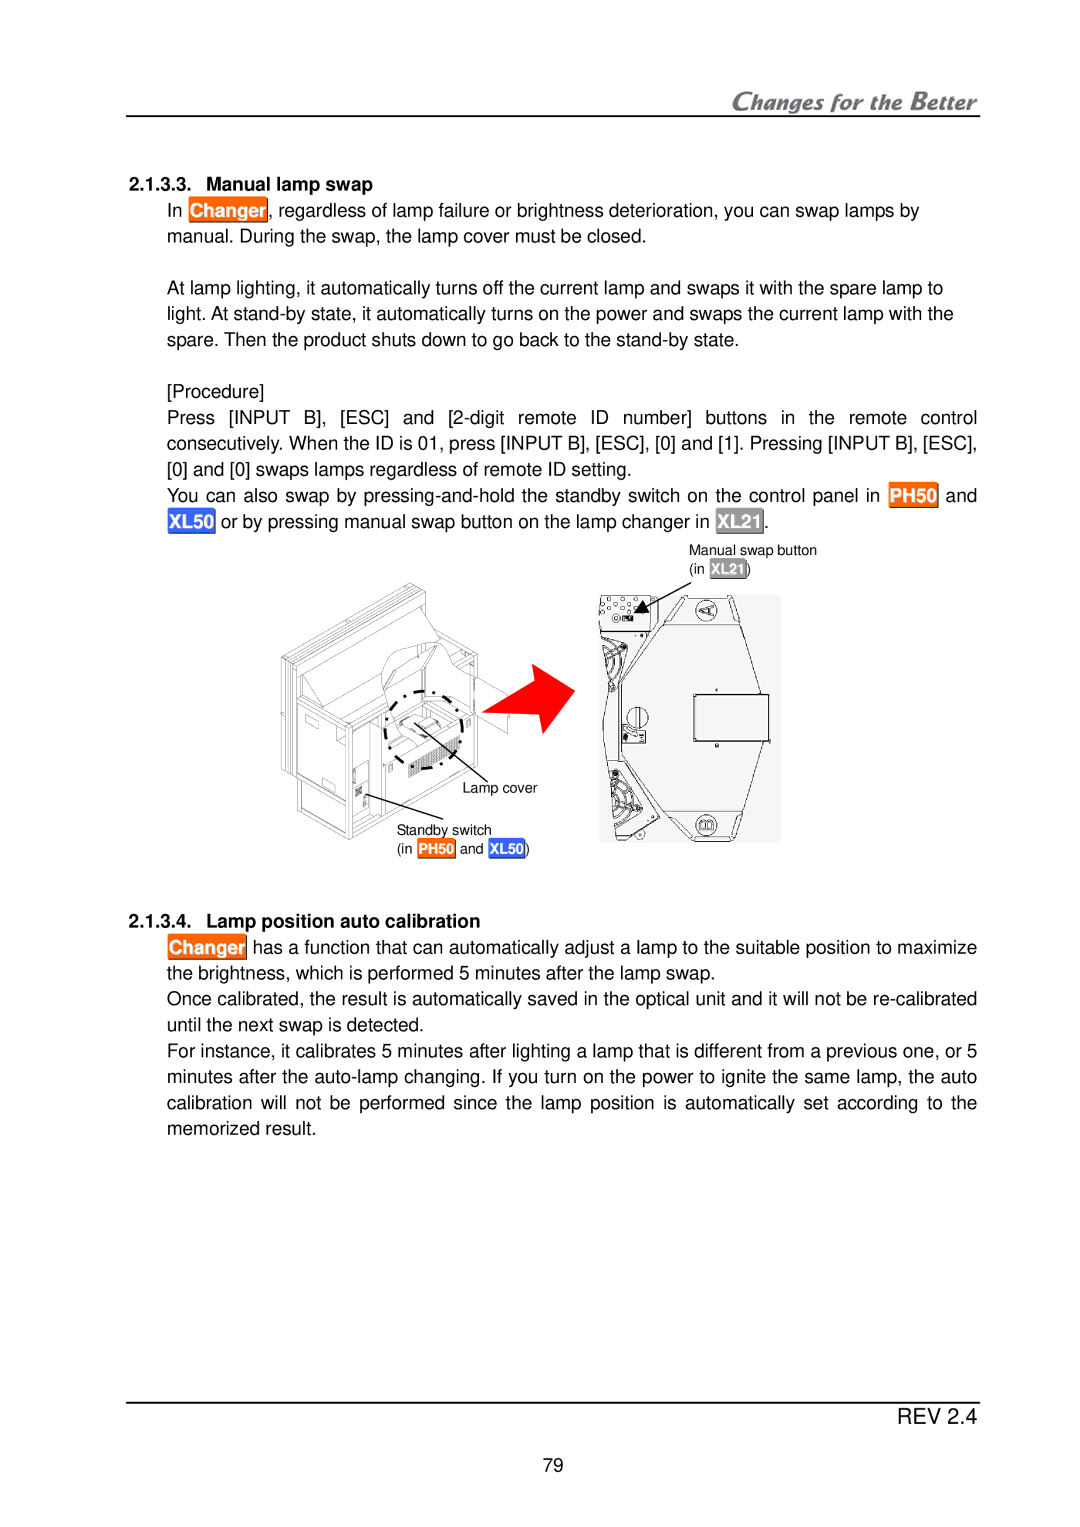 Mitsubishi Electronics XL21, XL50 installation manual Manual lamp swap, Lamp position auto calibration 